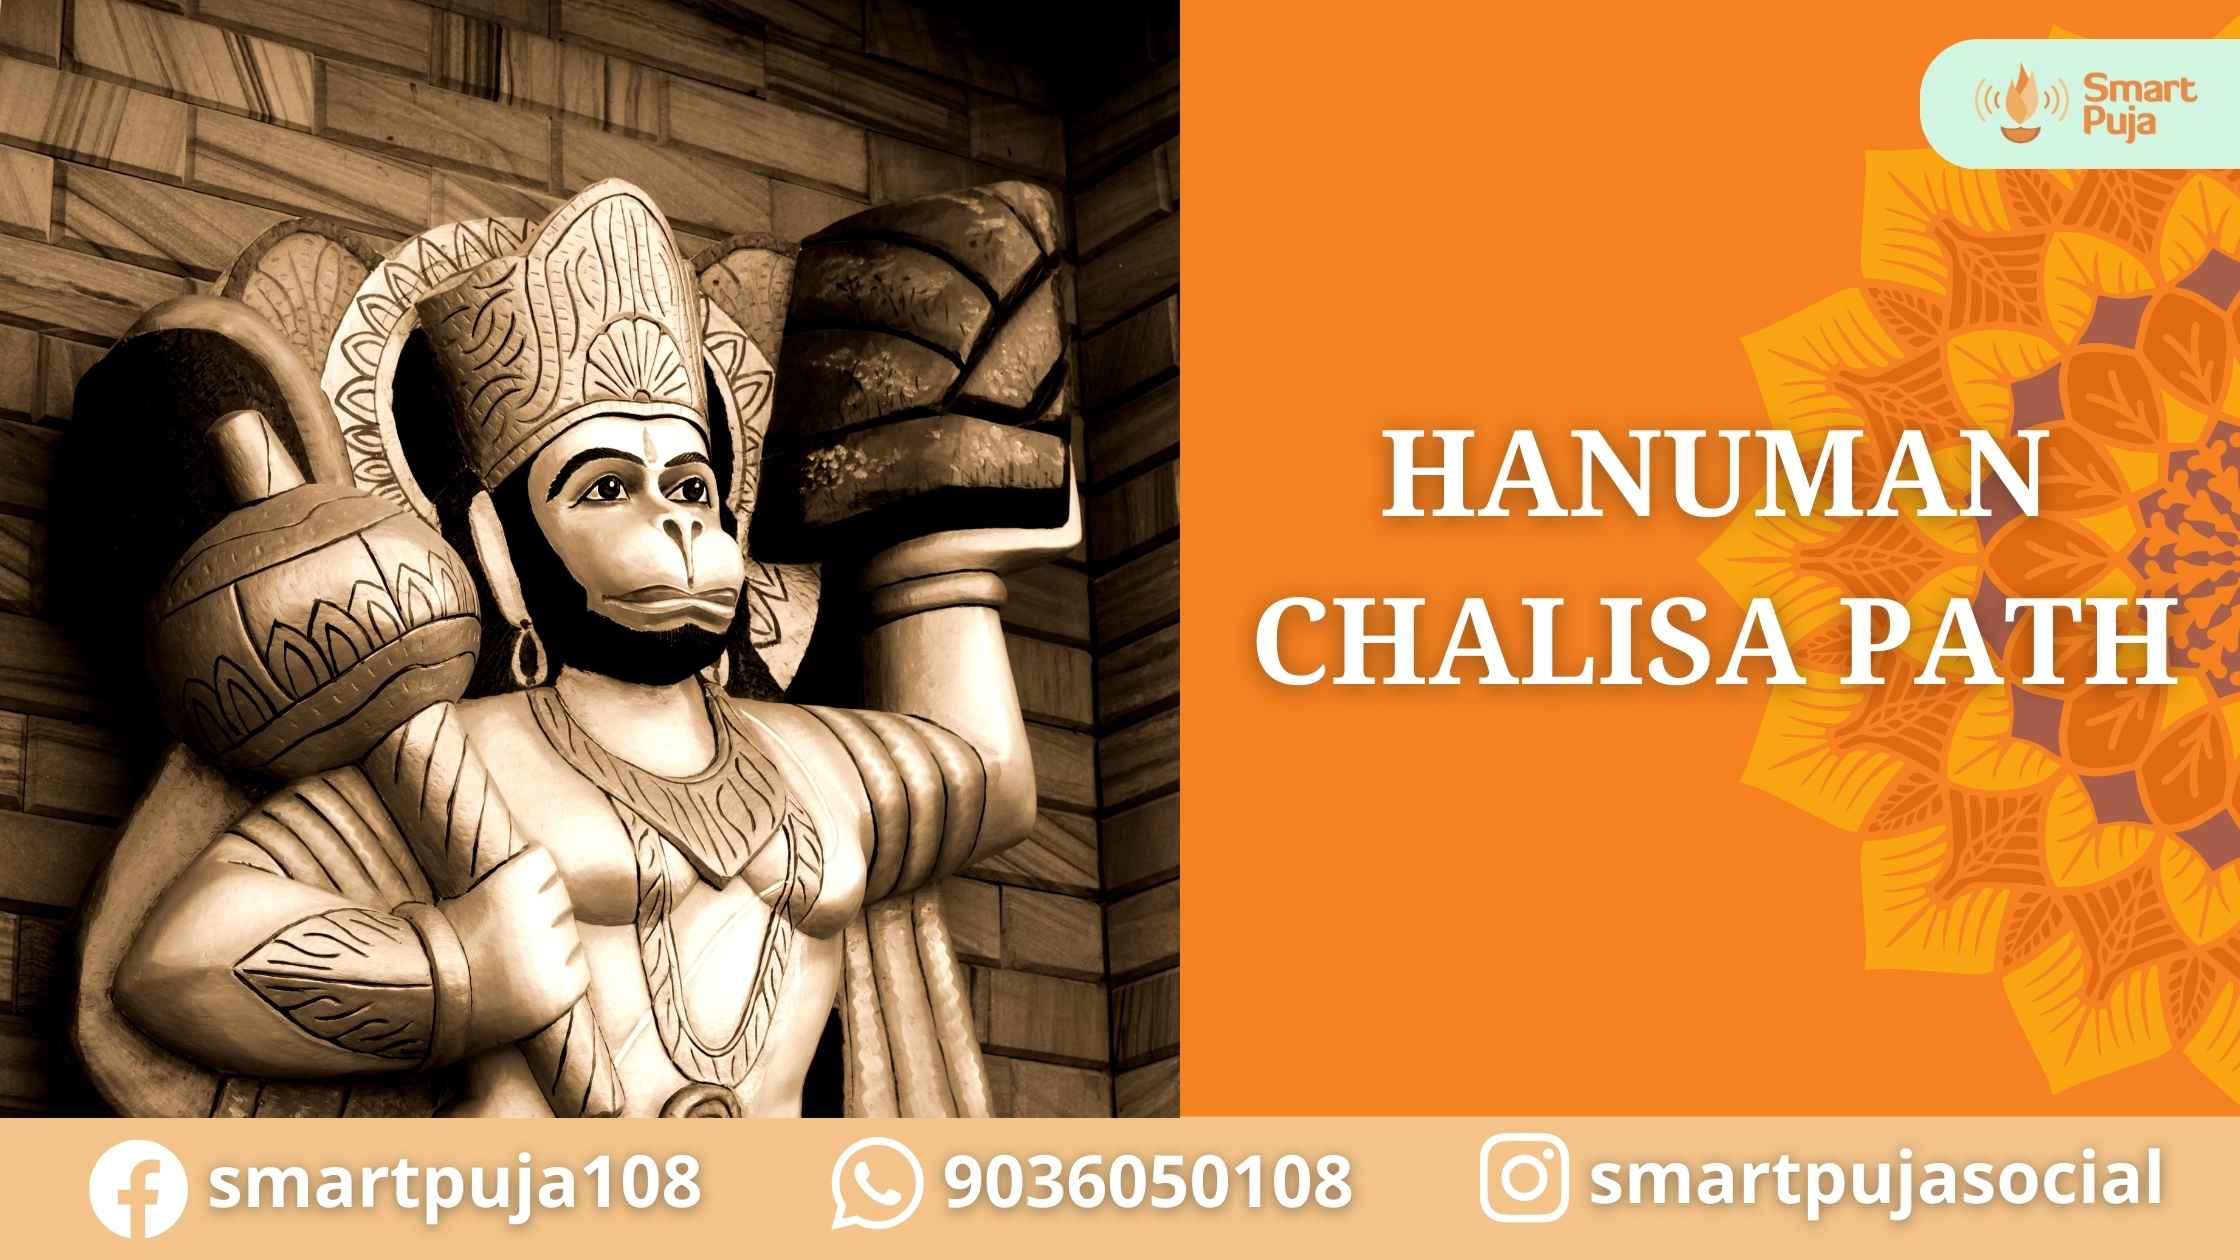 Hanuman Chalisa Path